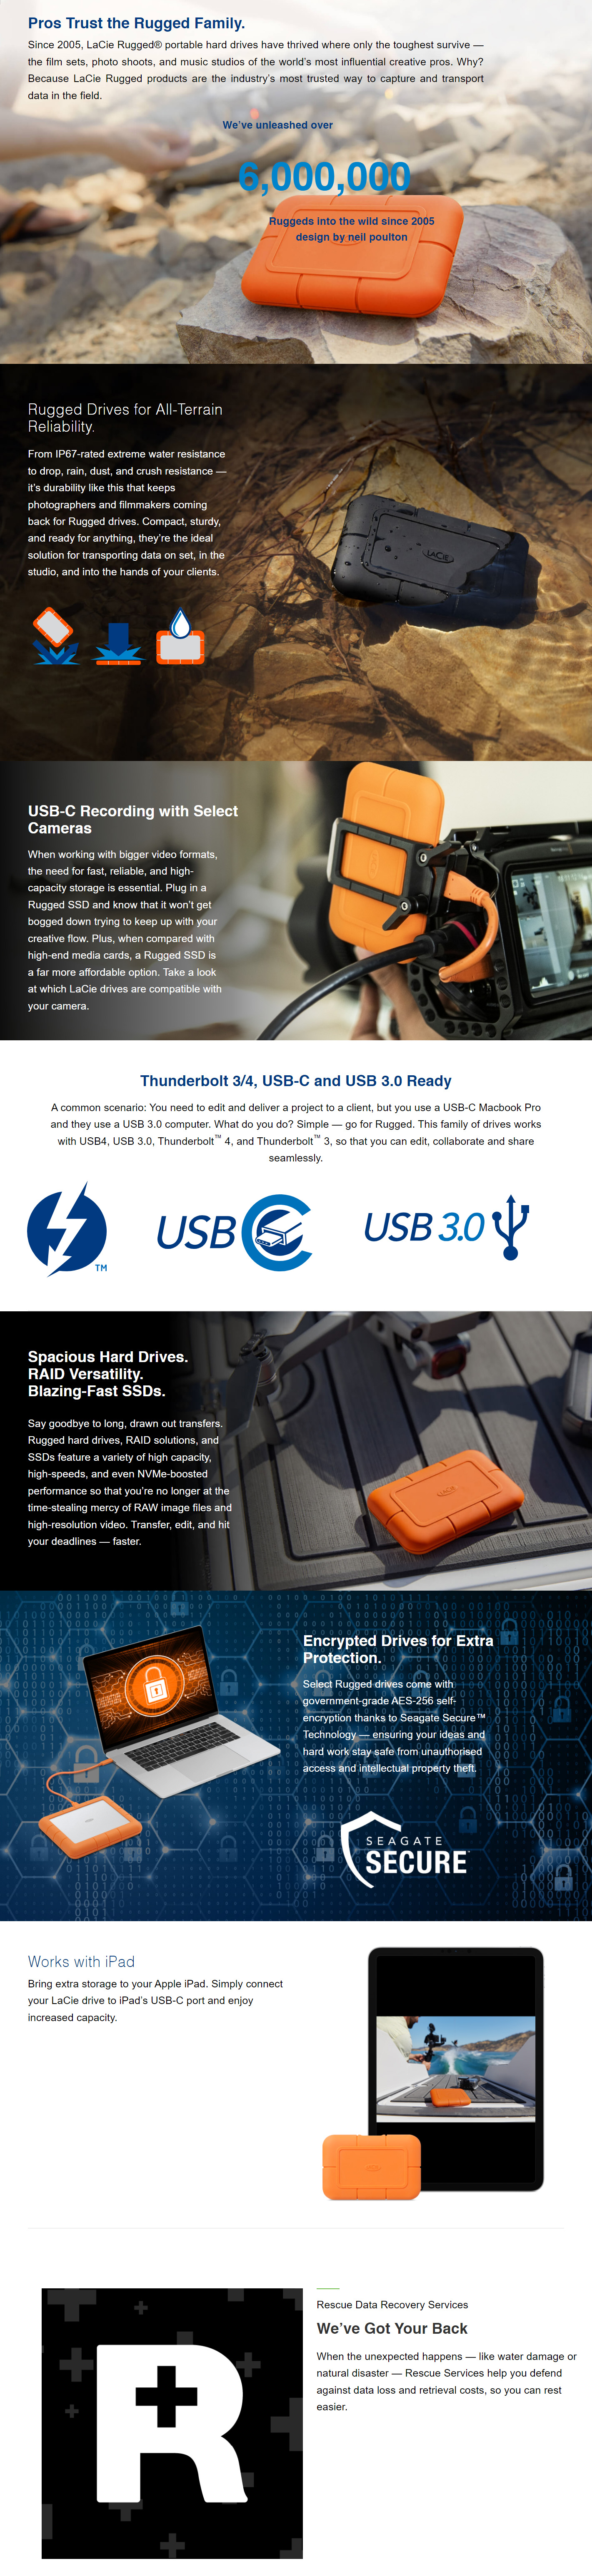 External-SSD-Hard-Drives-LaCie-4TB-Rugged-Pro-USB-Type-C-Portable-External-SSD-Black-1